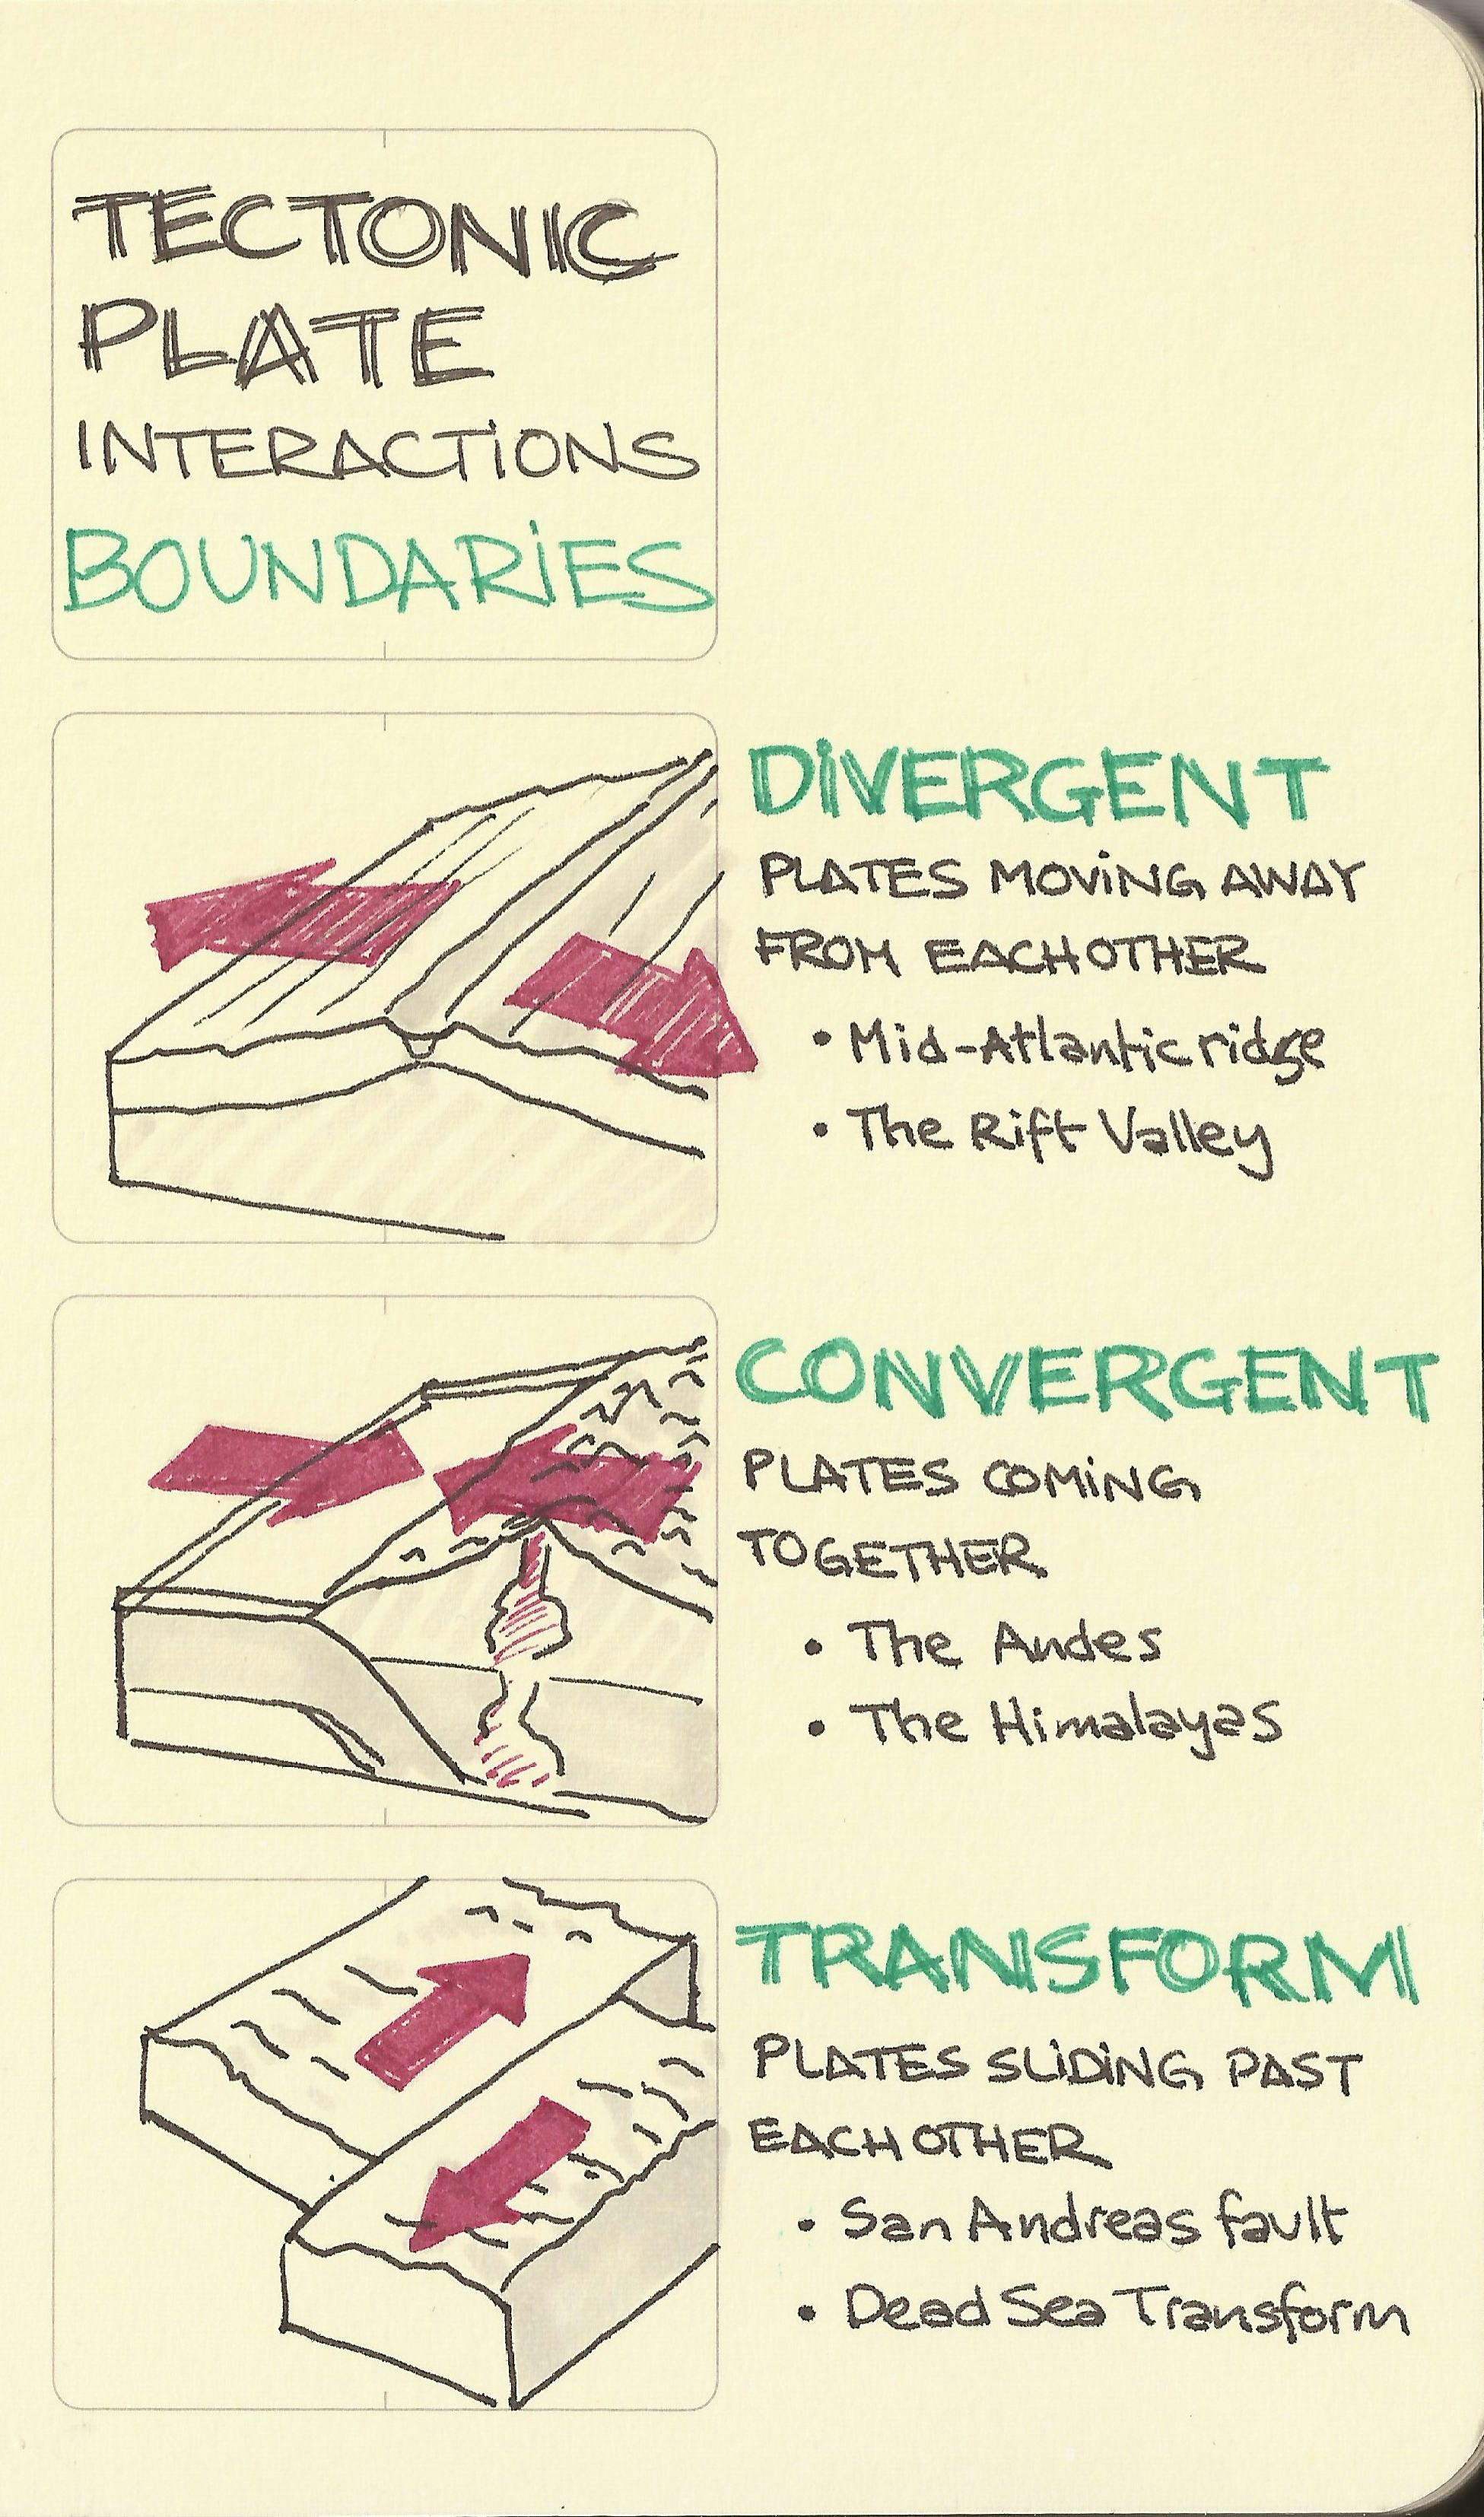 Illustration of divergent, convergent and transform plates